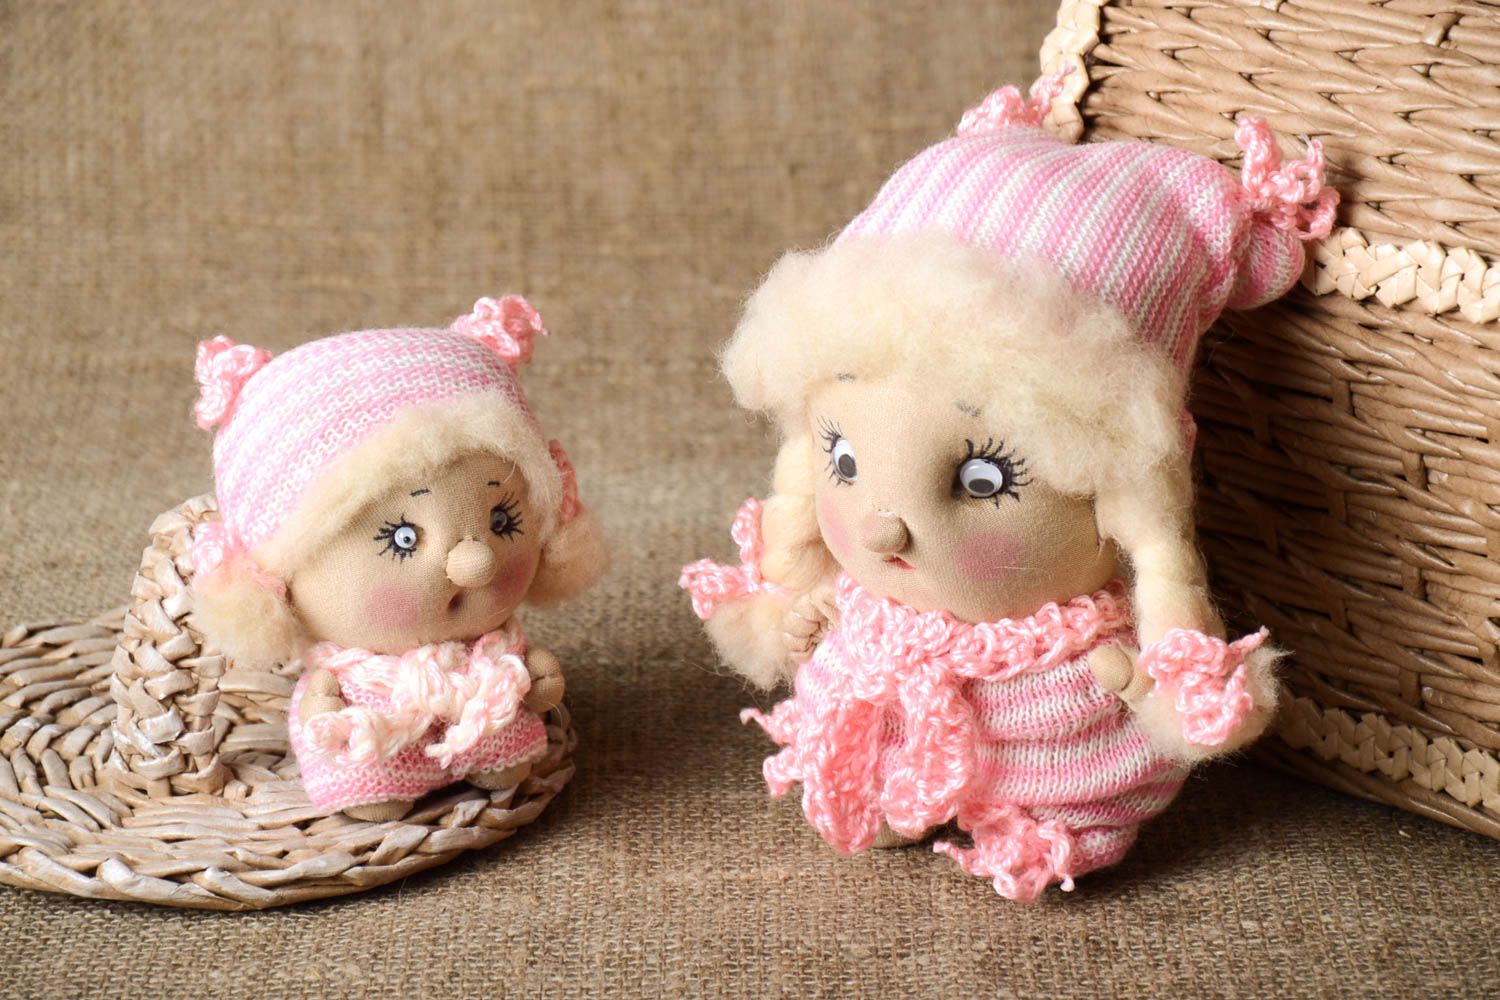 Handmade soft toys for children cute toys nursery decor ideas gift for baby photo 1